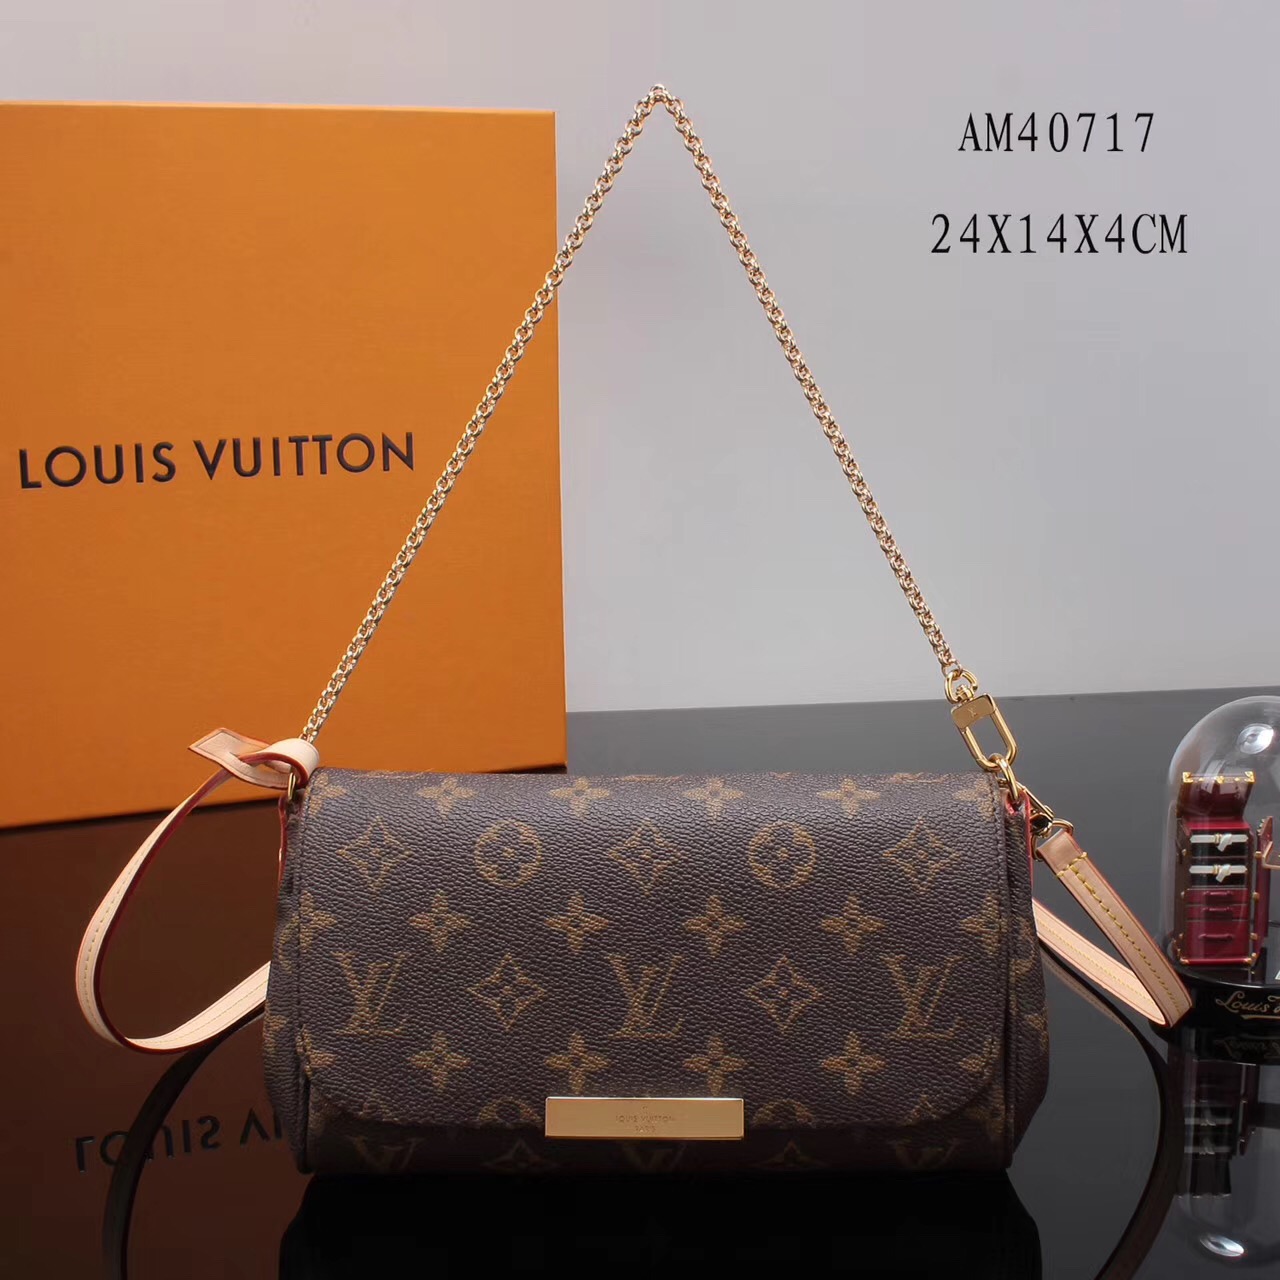 LV Louis Vuitton Monogram Small AM40717 Shoulder bags Handbags Brown